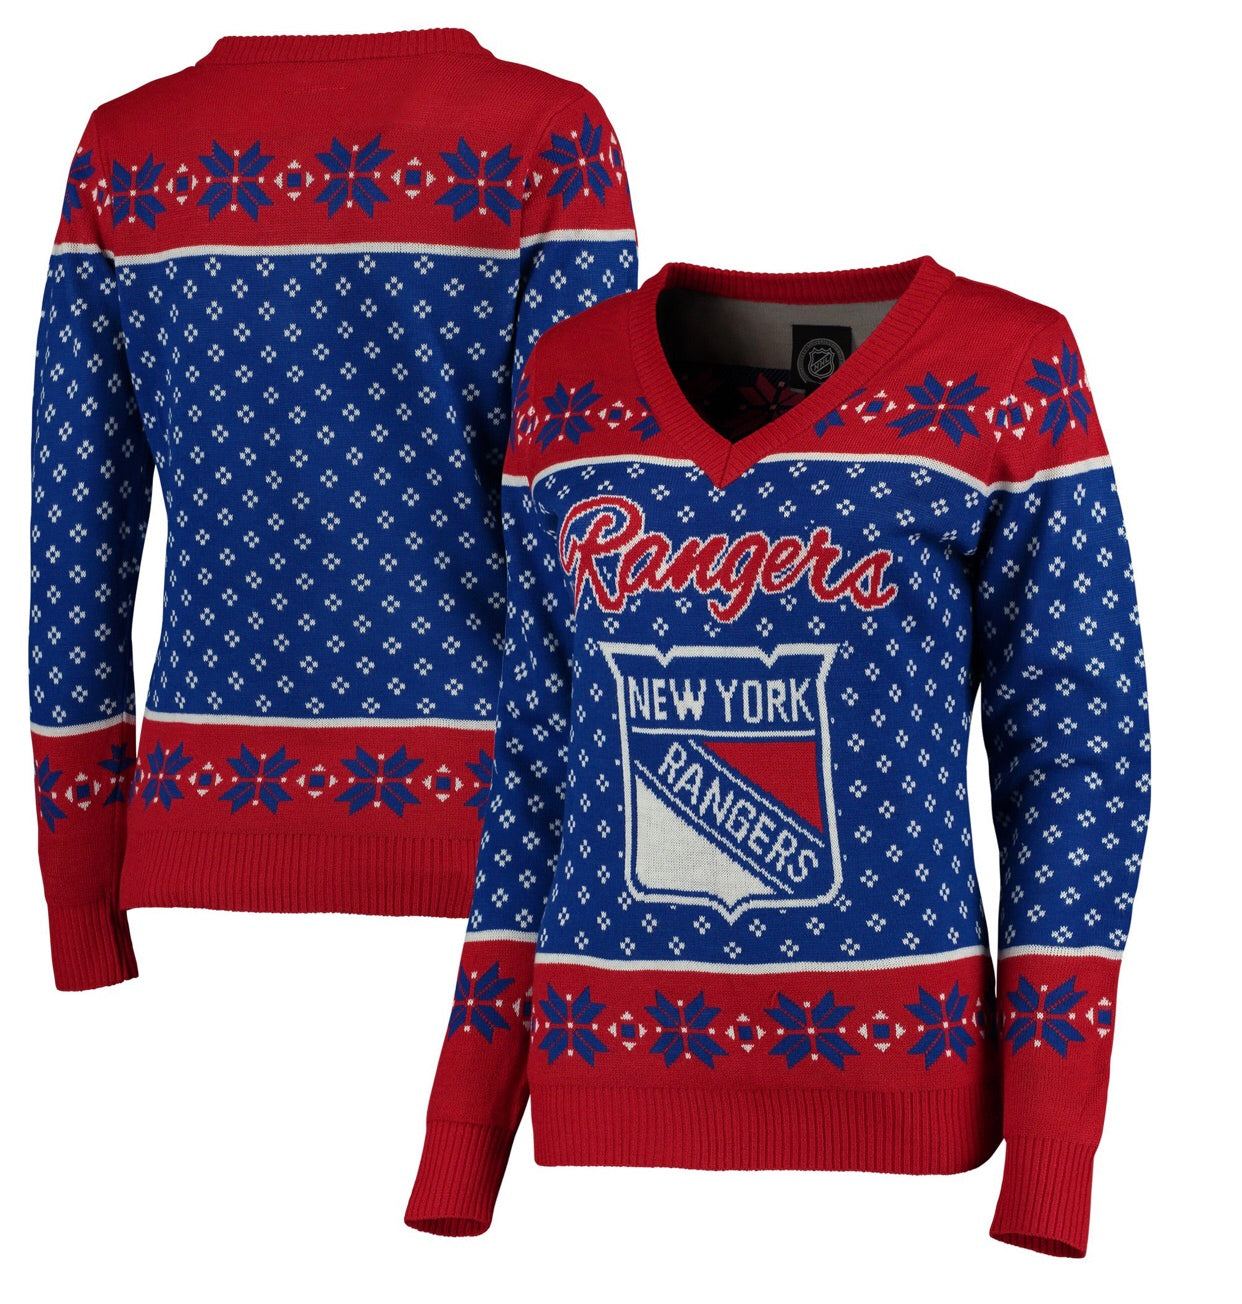 Nhlnew York Rangers Ugly Christmas Sweater - Shibtee Clothing